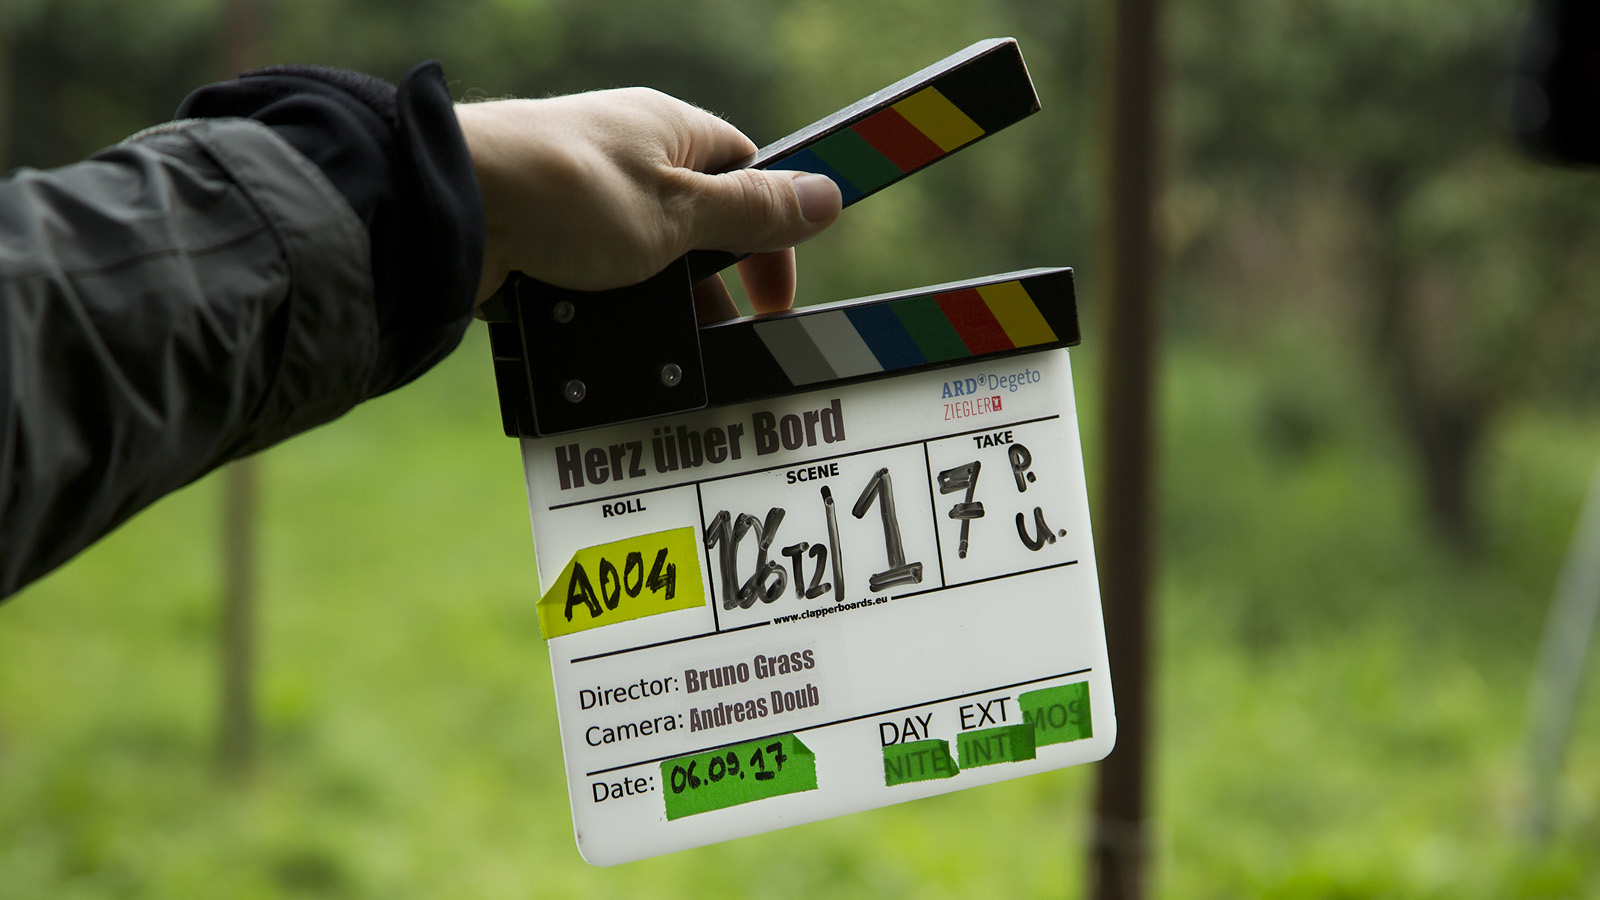 "Herz uber Bord" shooting for ARD